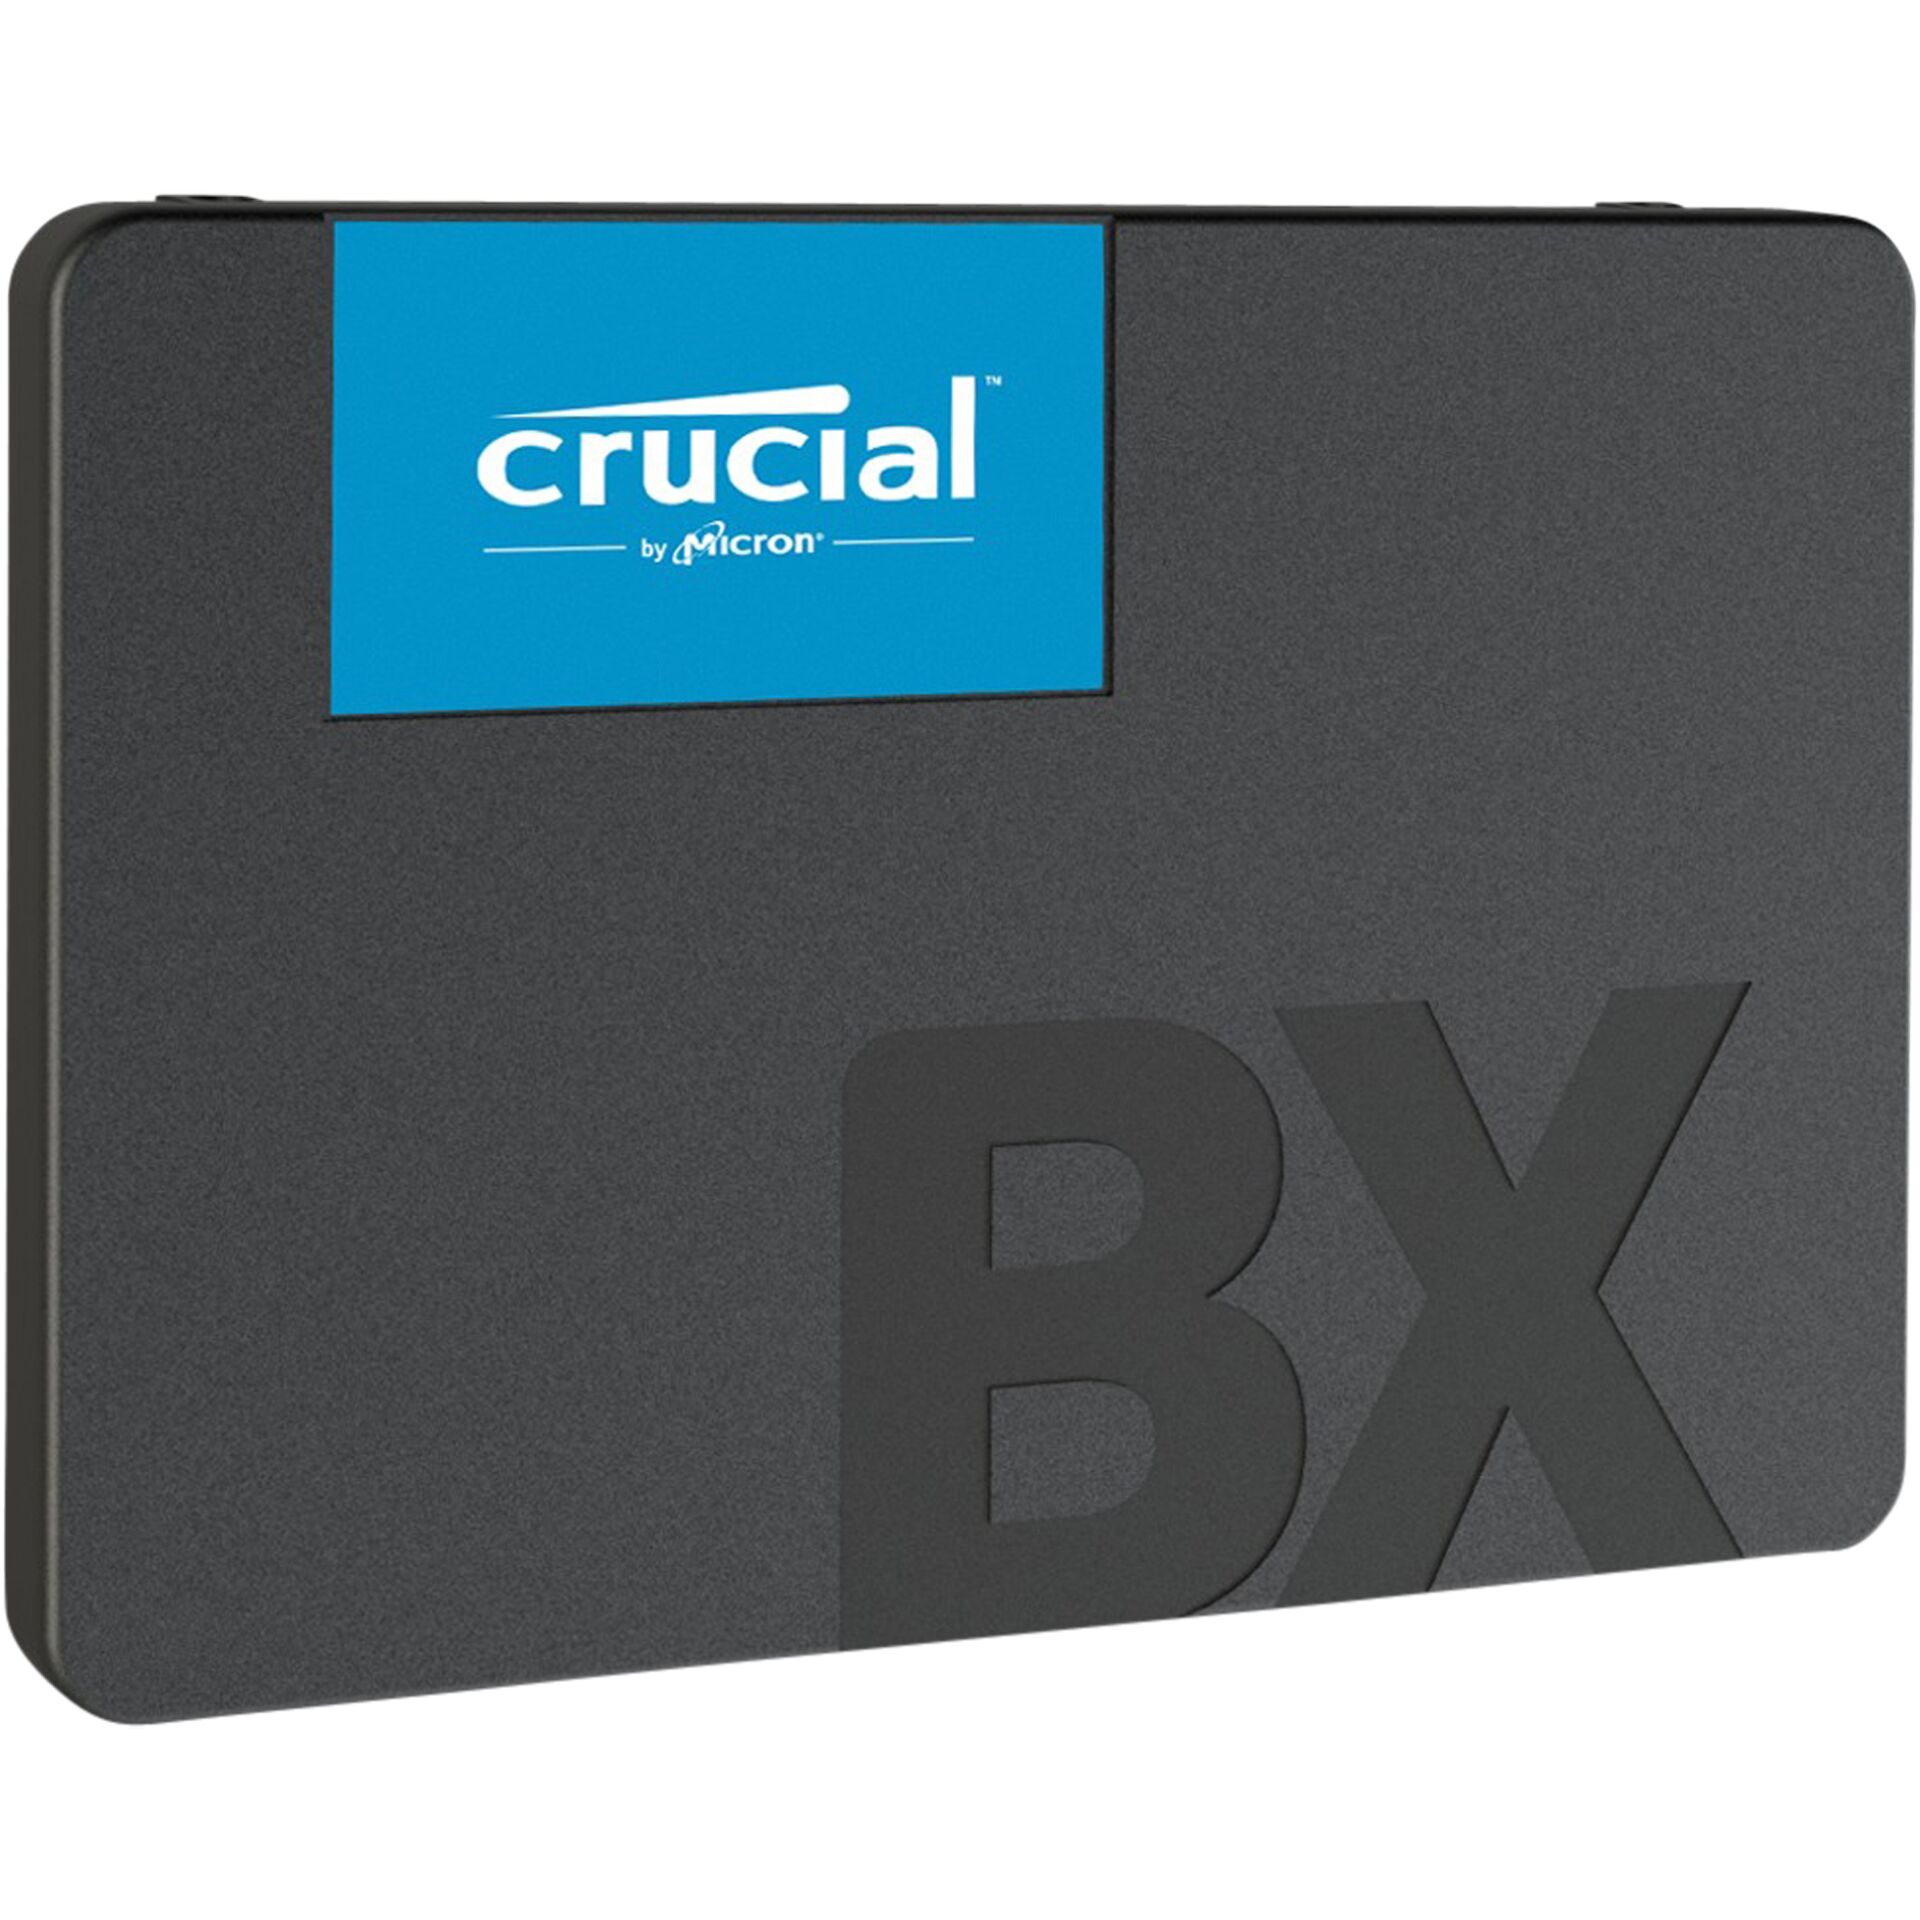 2.0 TB SSD Crucial BX500, SATA 6Gb/s, lesen: 540MB/s, schreiben: 500MB/s, TBW: 720TB